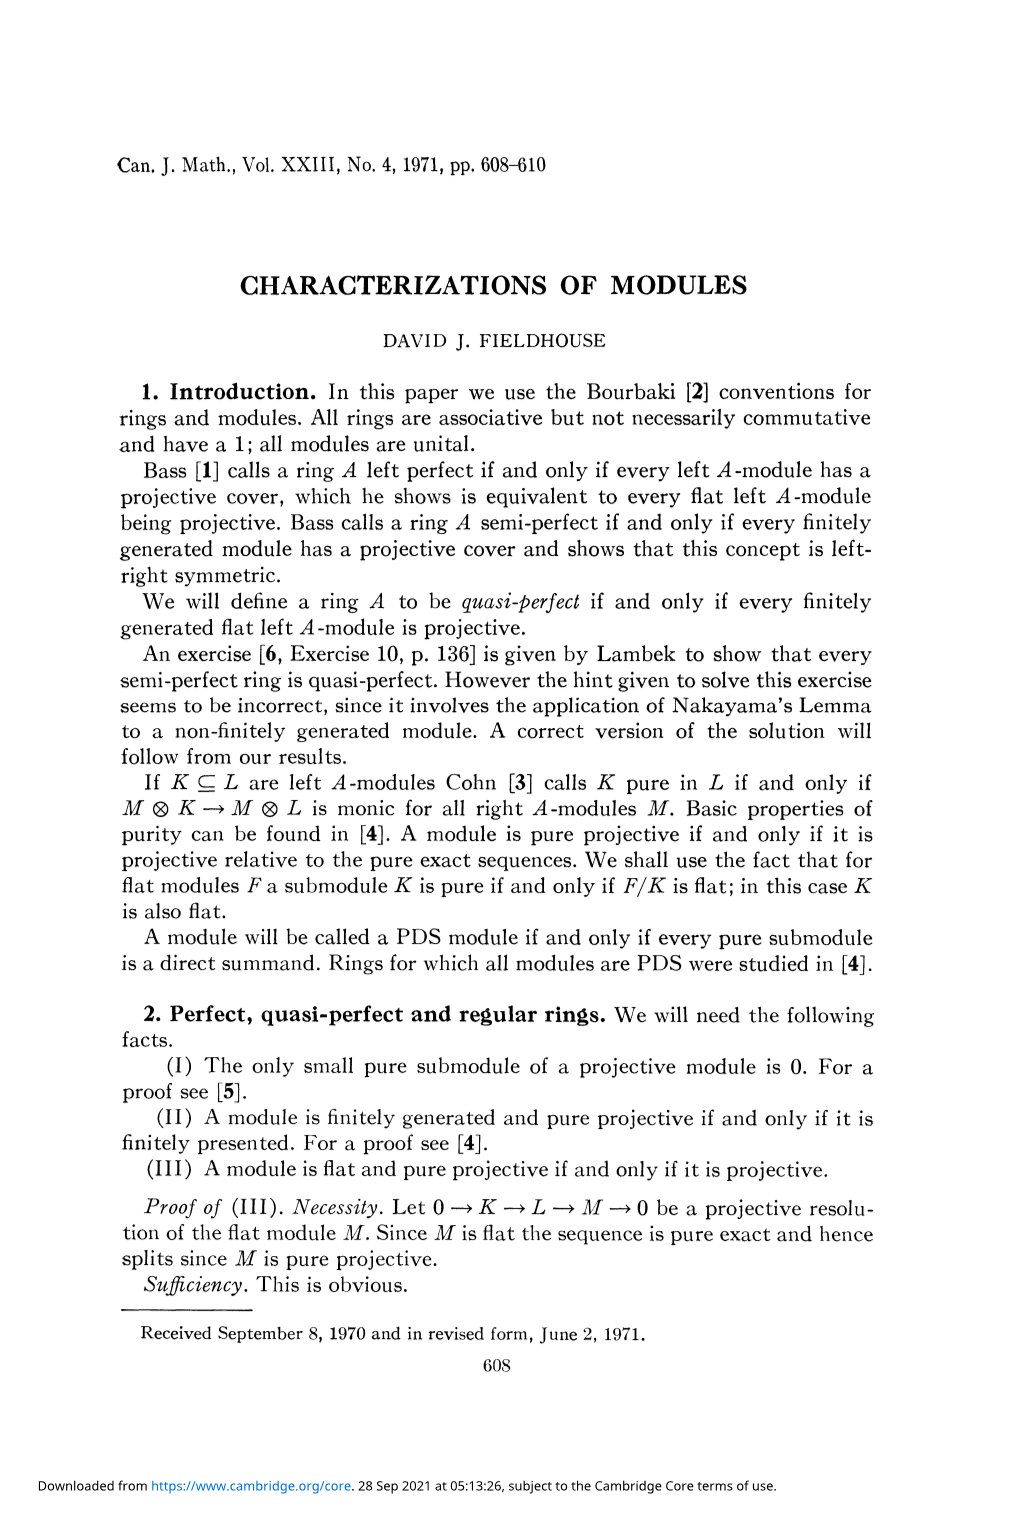 Characterizations of Modules